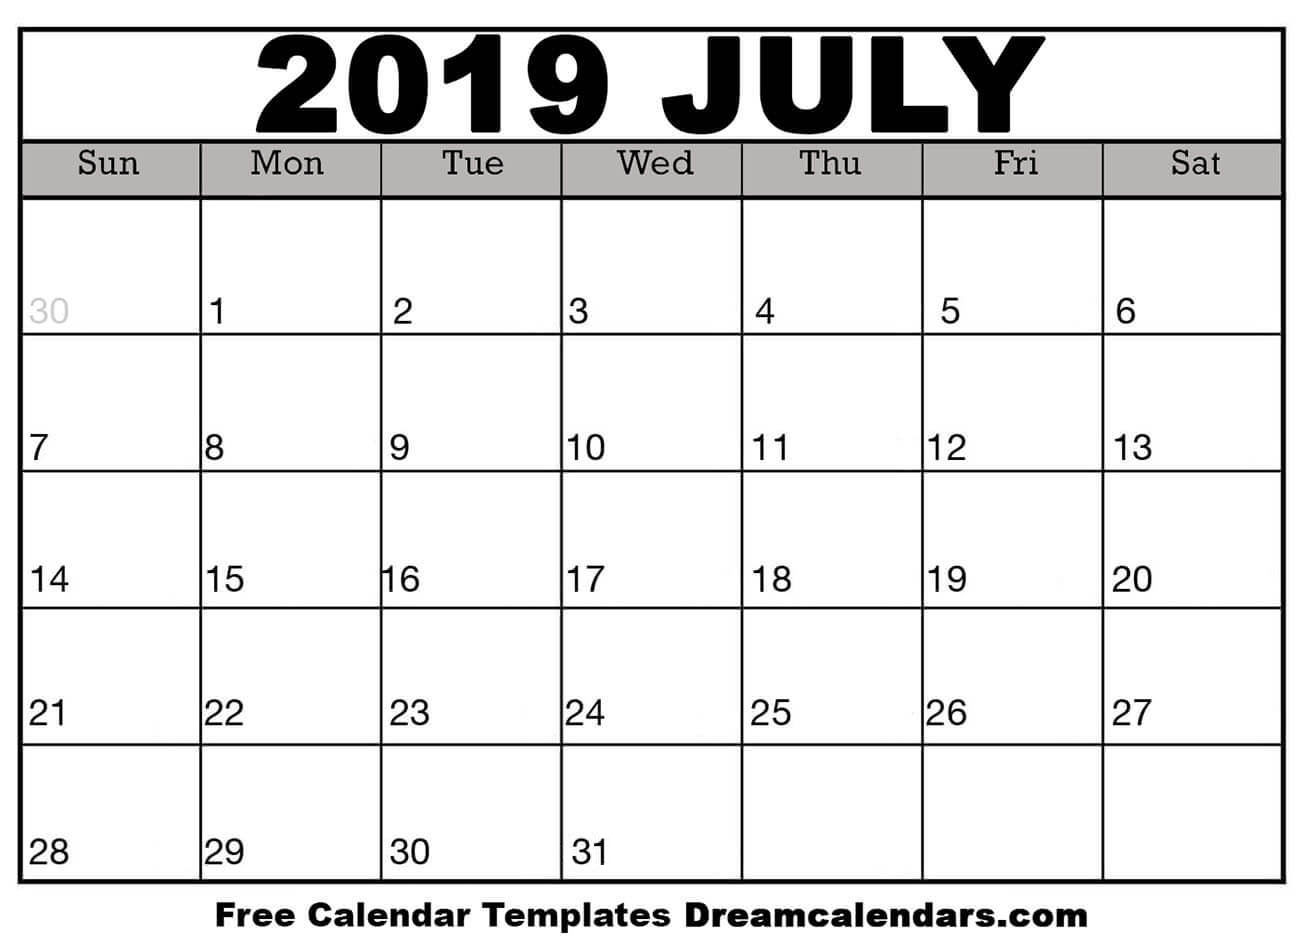 July 2019 calendar free blank printable templates